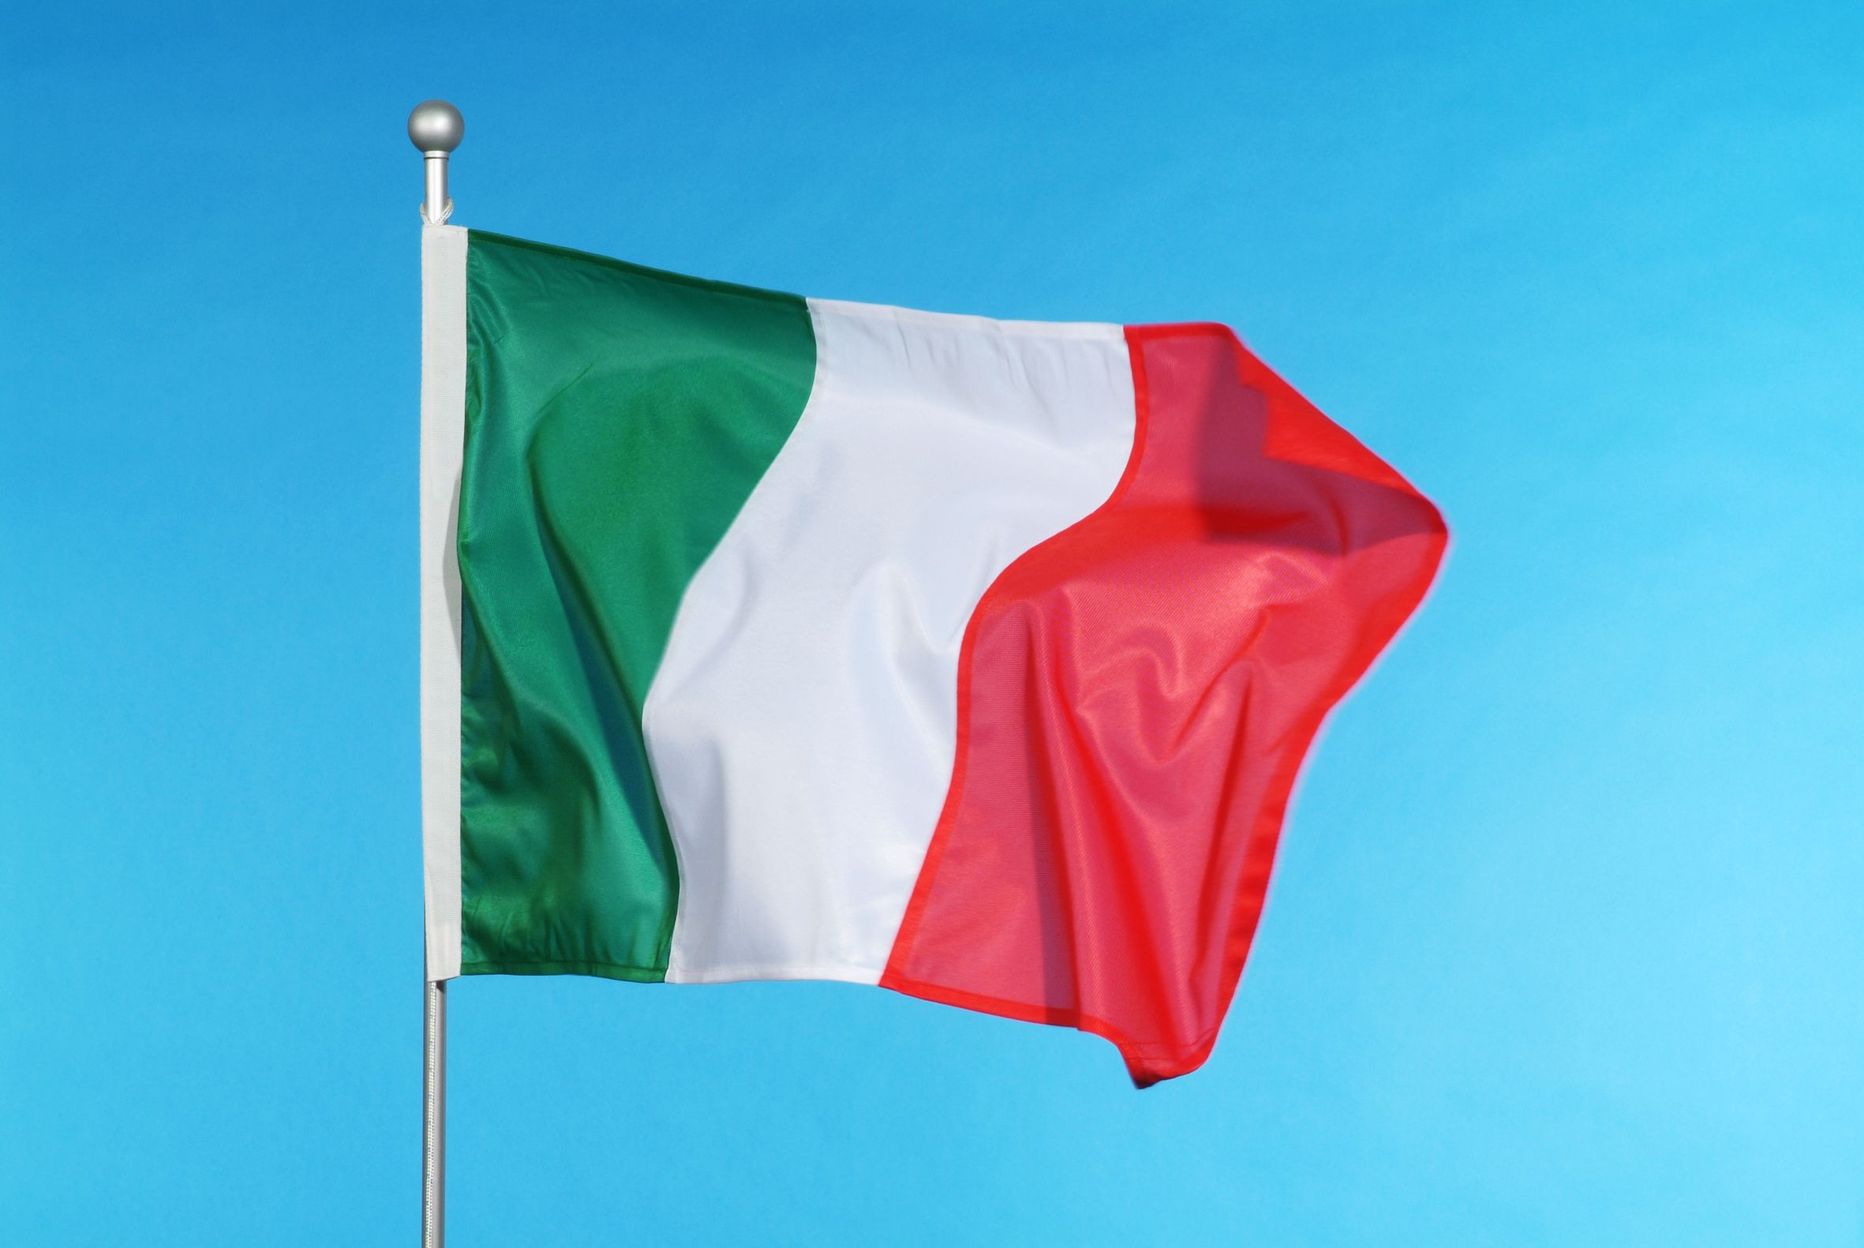 Флаг Италии. Иллюстративное фото.